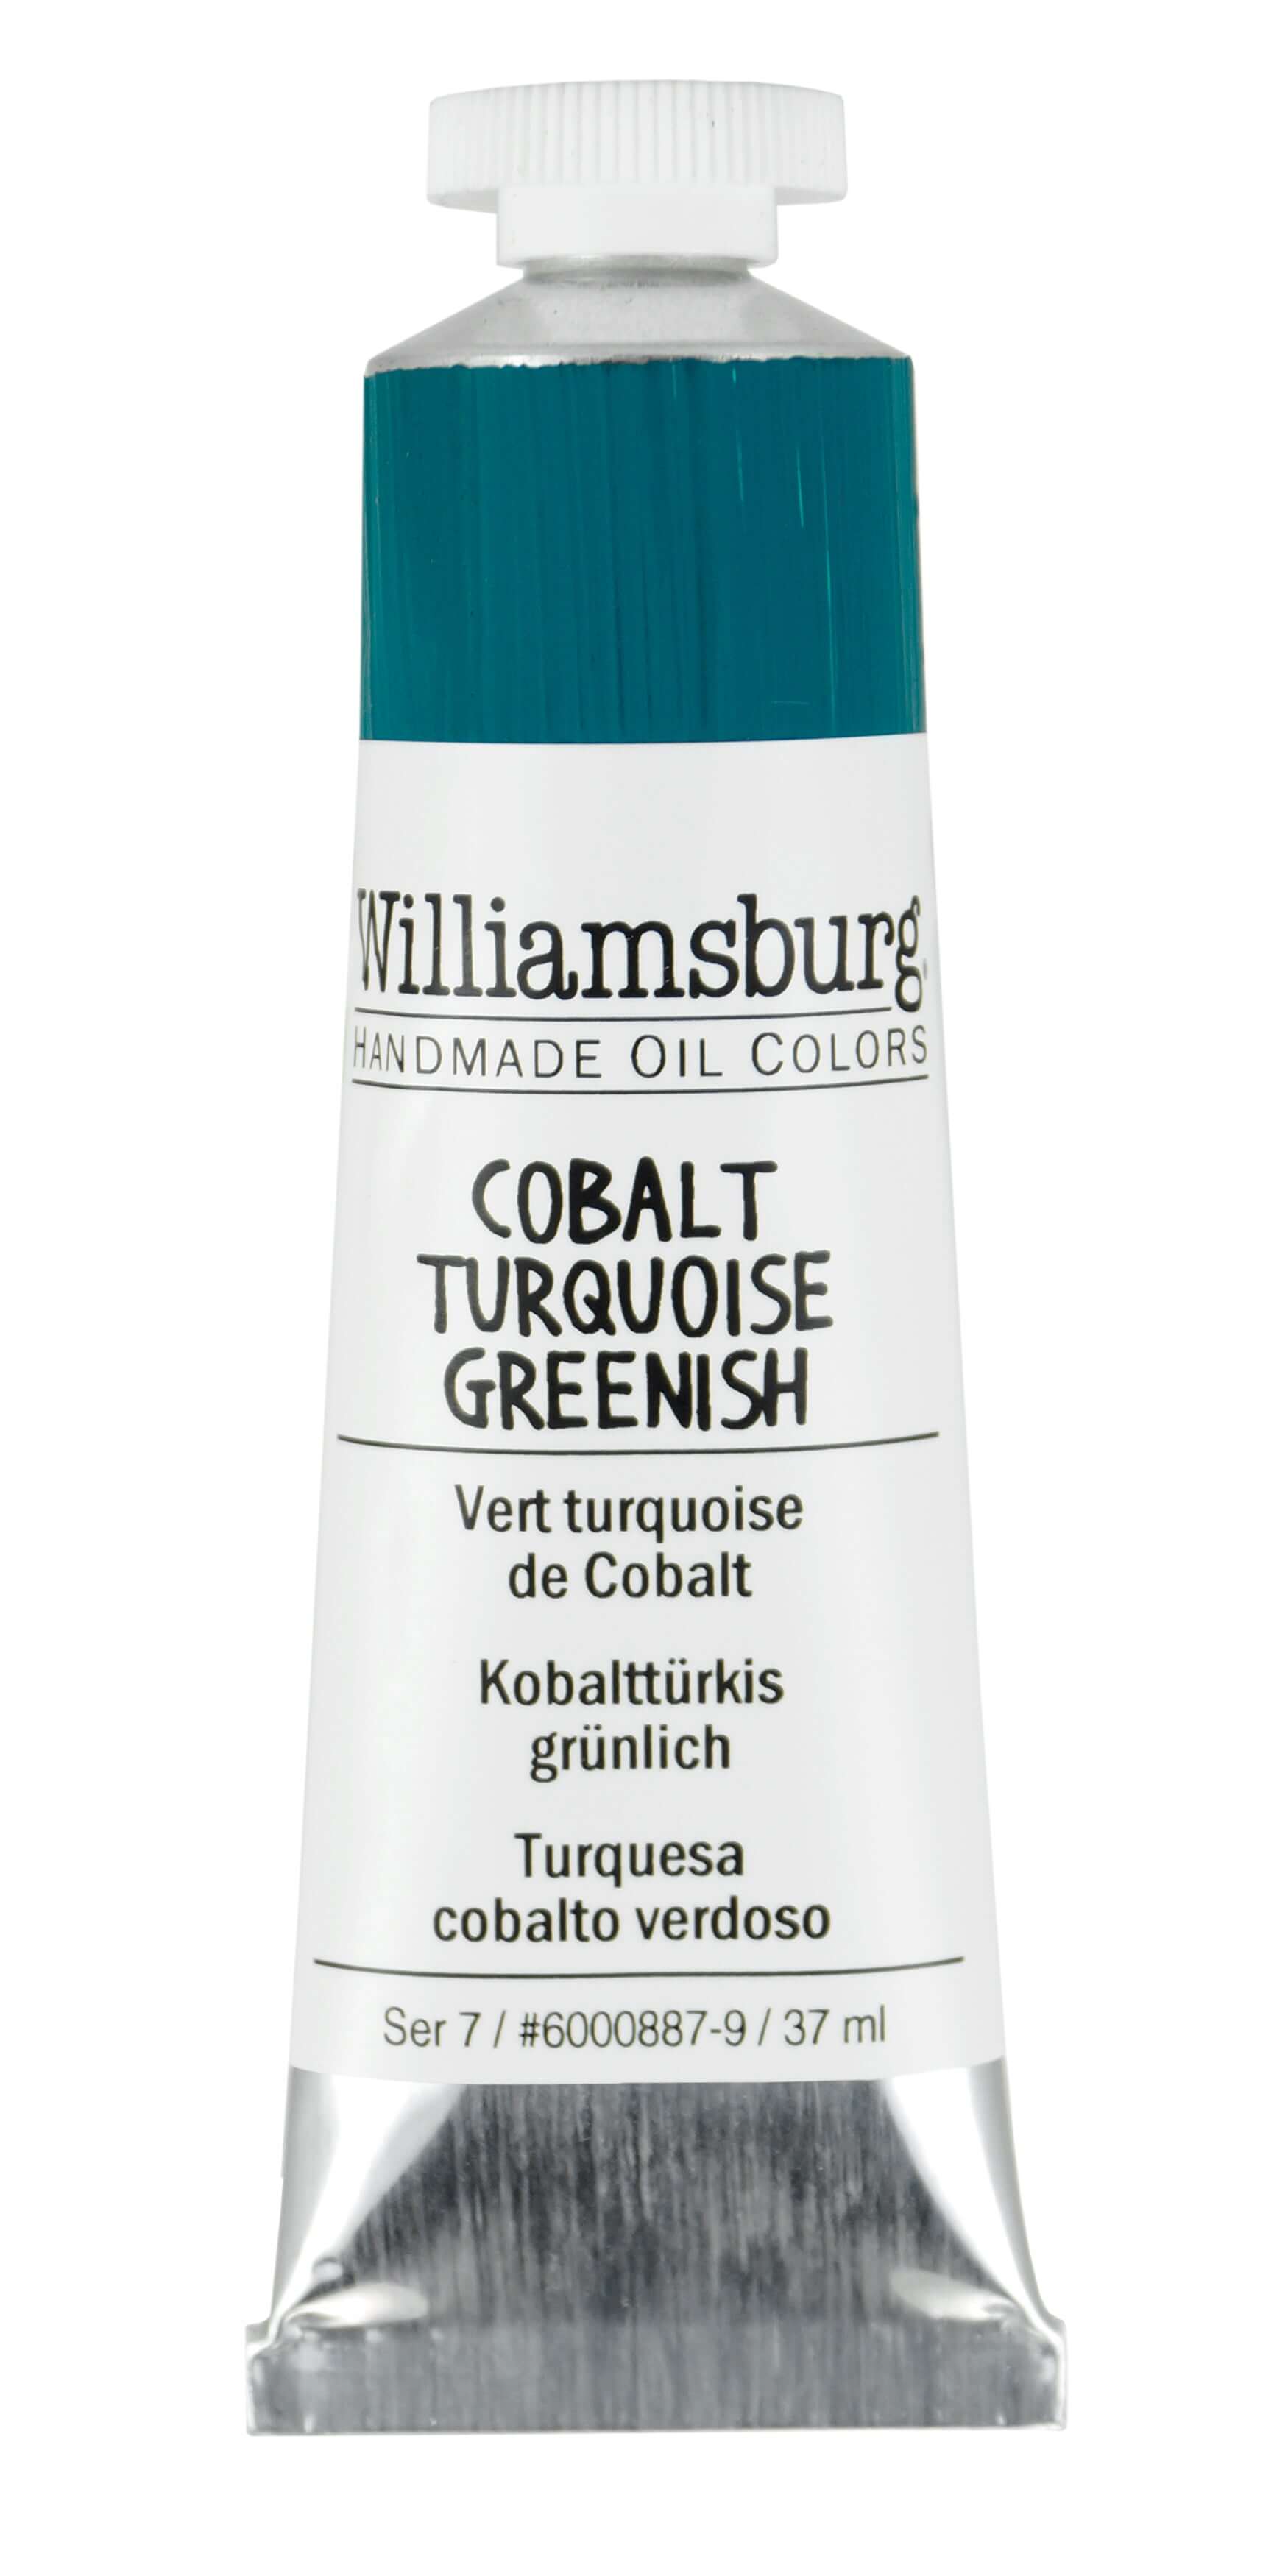 Williamsburg Oliemaling Cobalt Turqoise Greenish